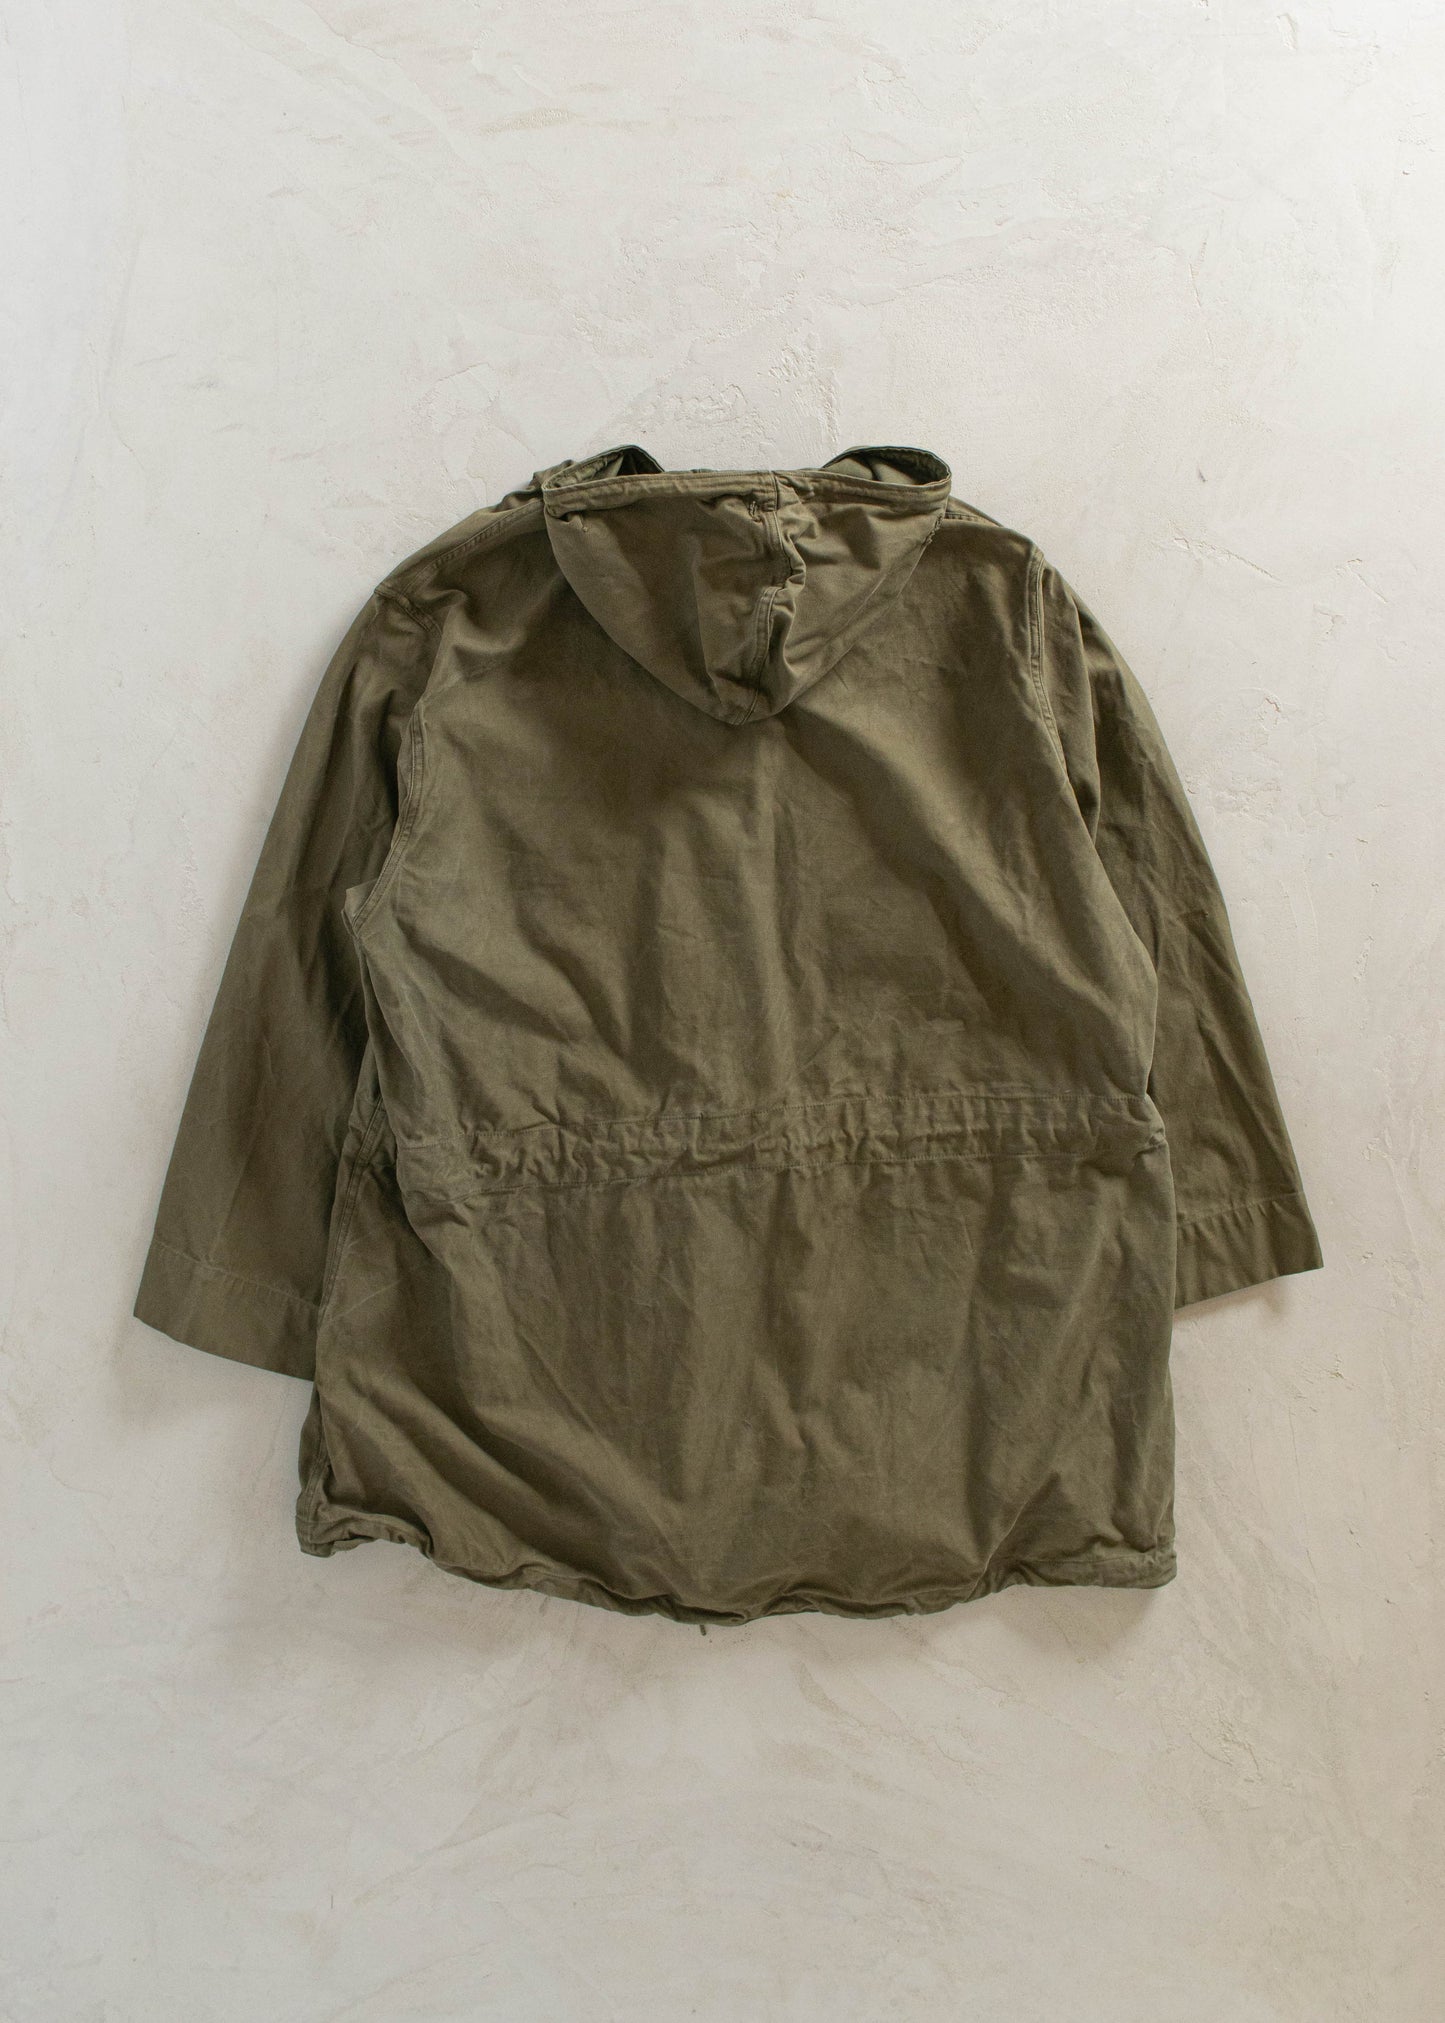 1943 Military Overcoat Field Parka Size XL/2XL